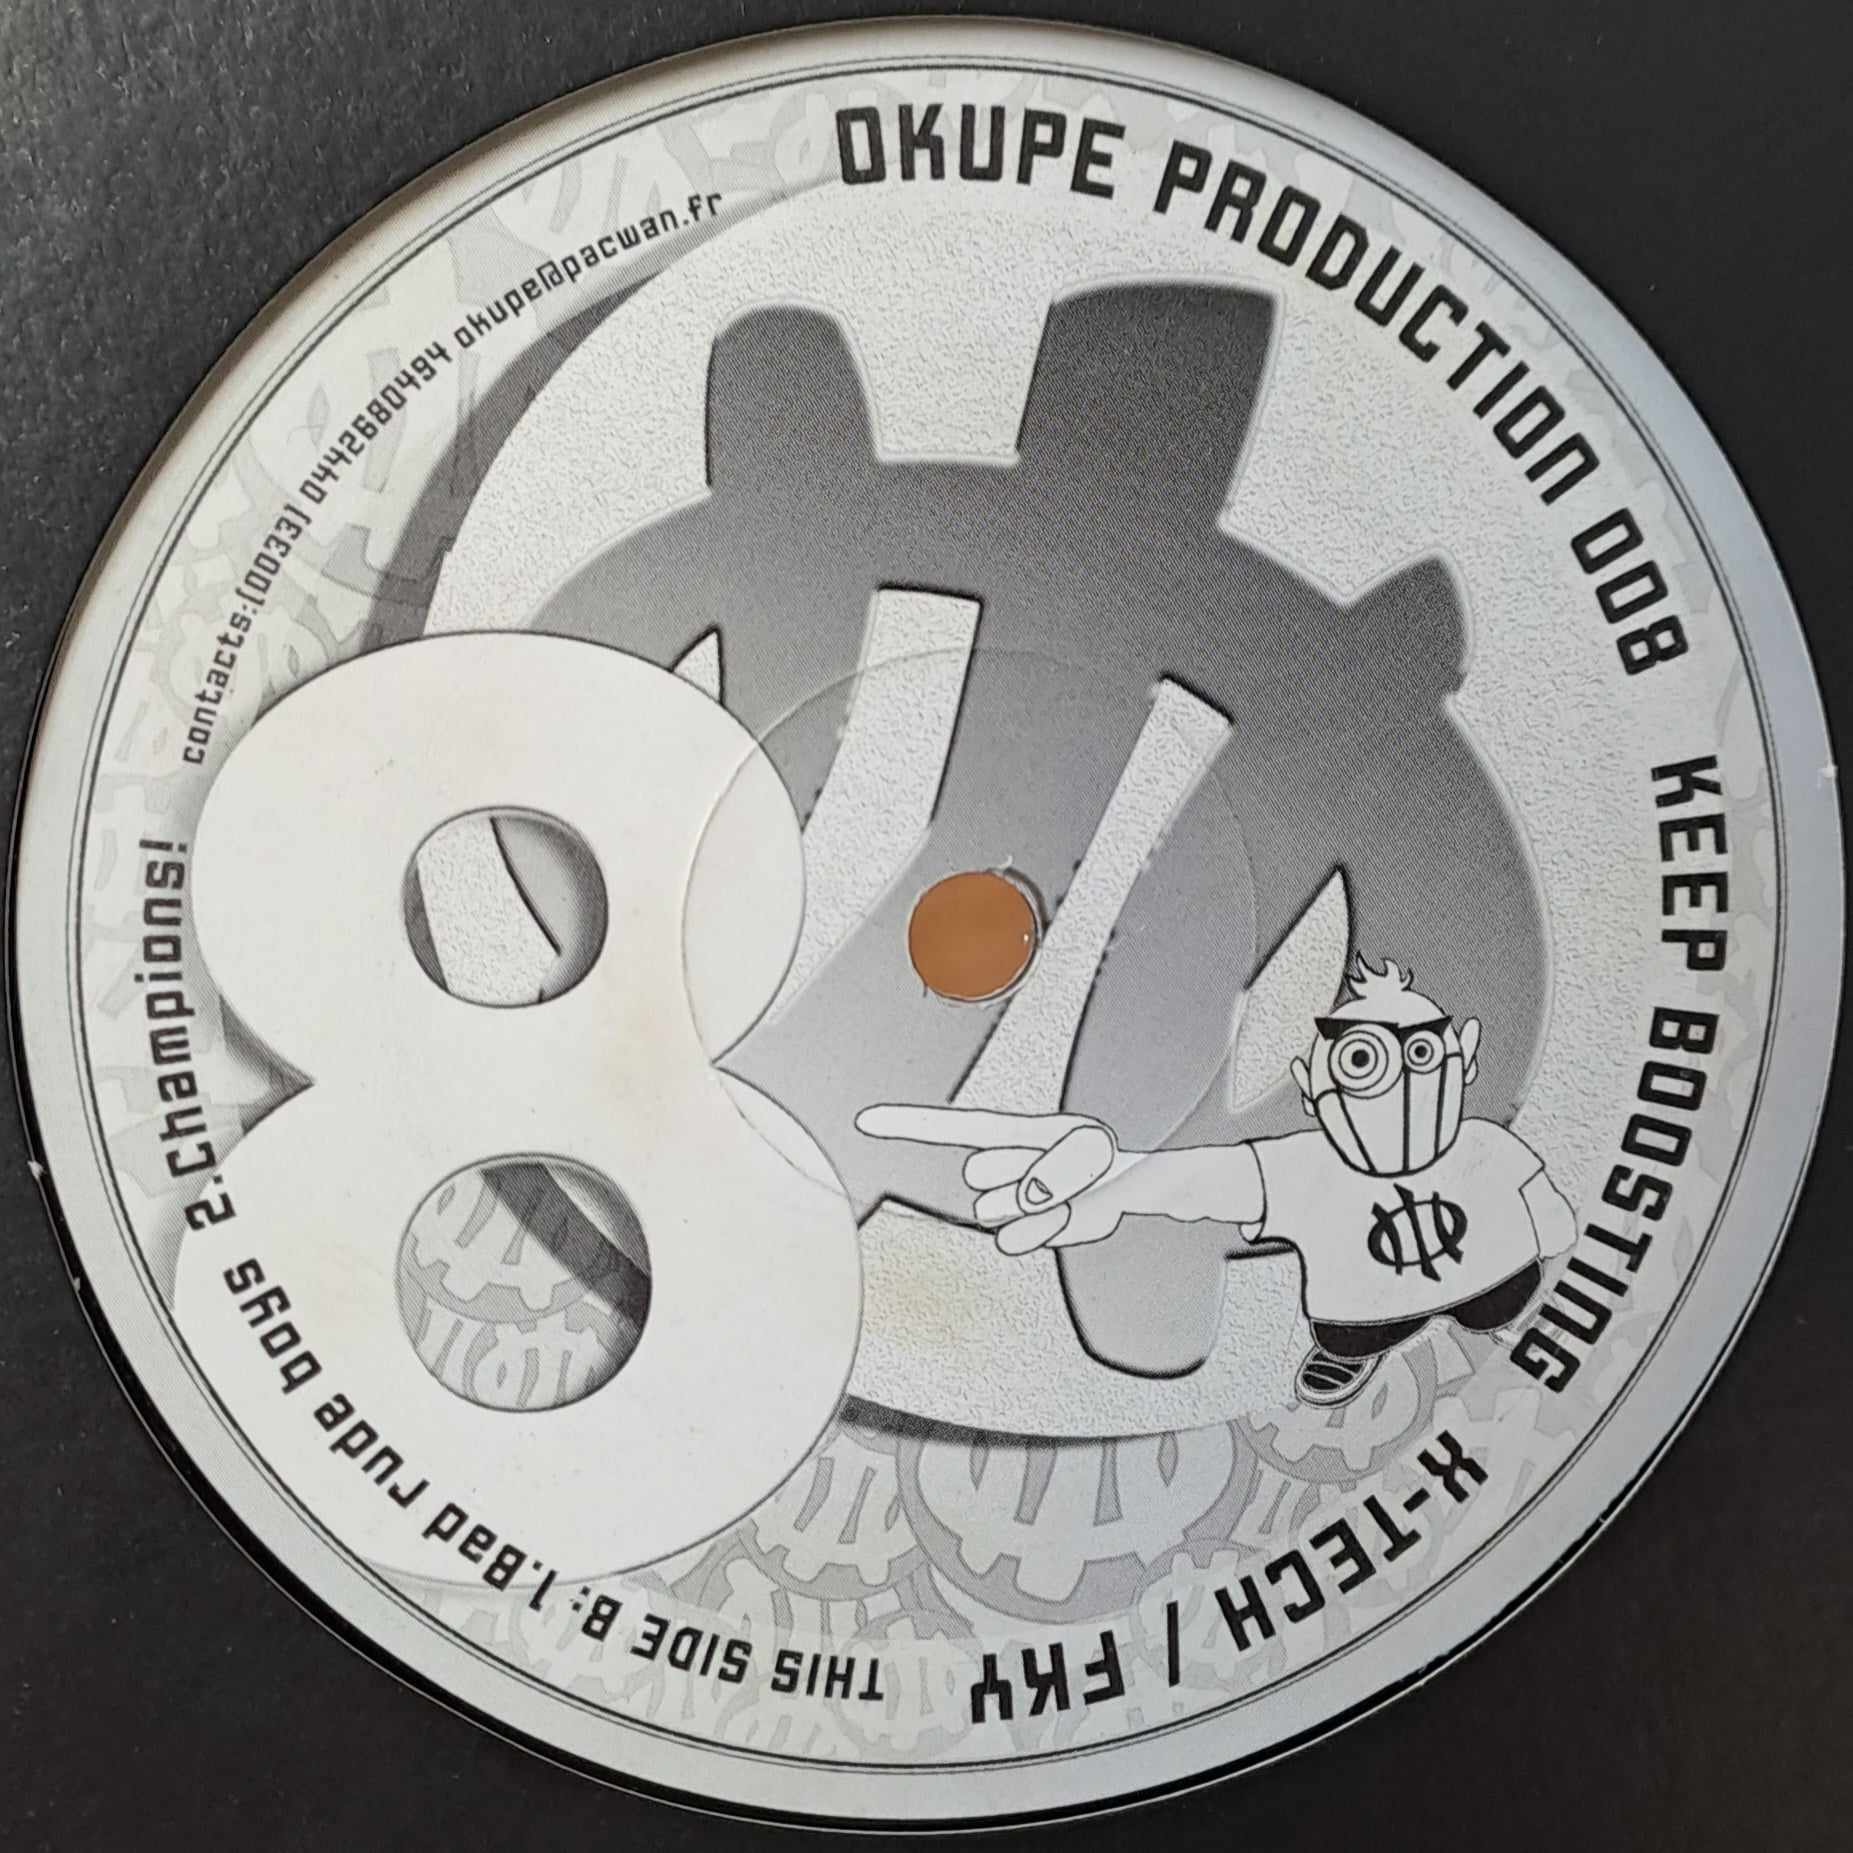 Okupe 08 - vinyle freetekno